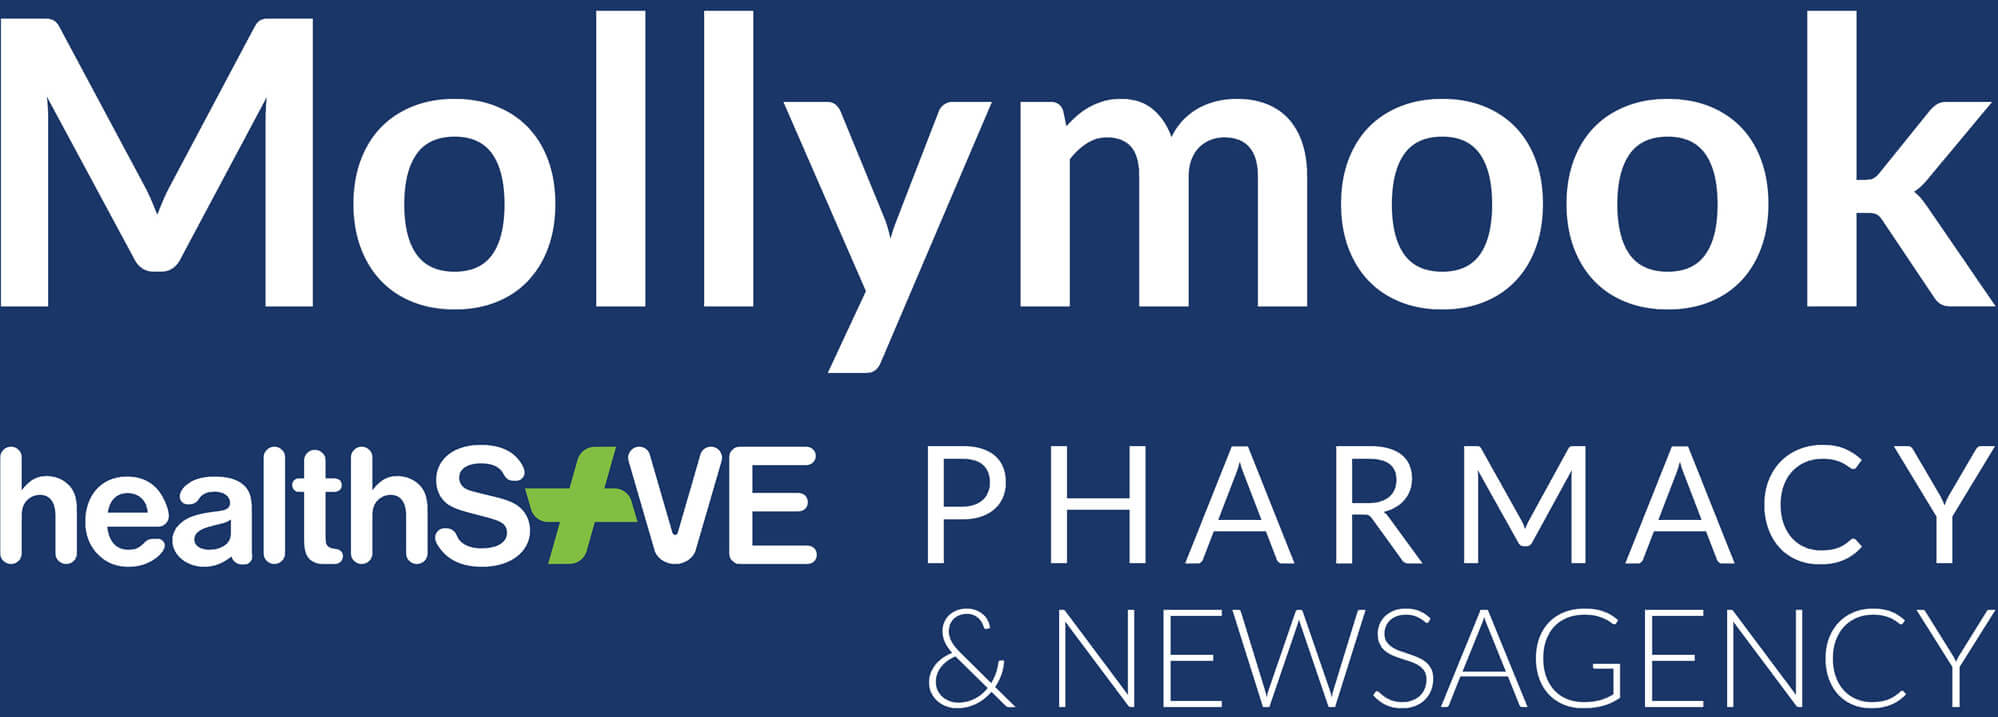 Mollymook HealthSave Pharmacy and Newsagency